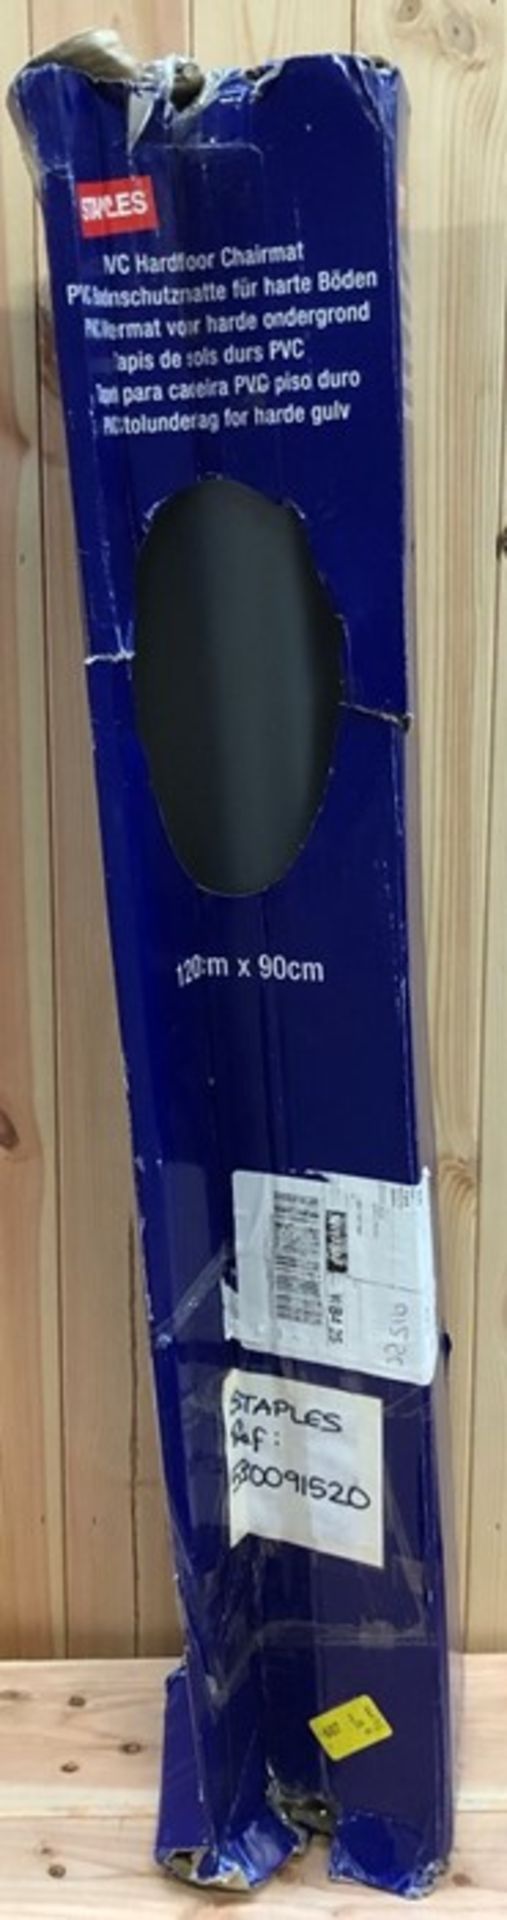 1 BOXED PVC HARD FLOOR CHAIRMAT / SIZE 120 X 90CM / RRP £35.99 (PUBLIC VIEWING AVAILABLE)